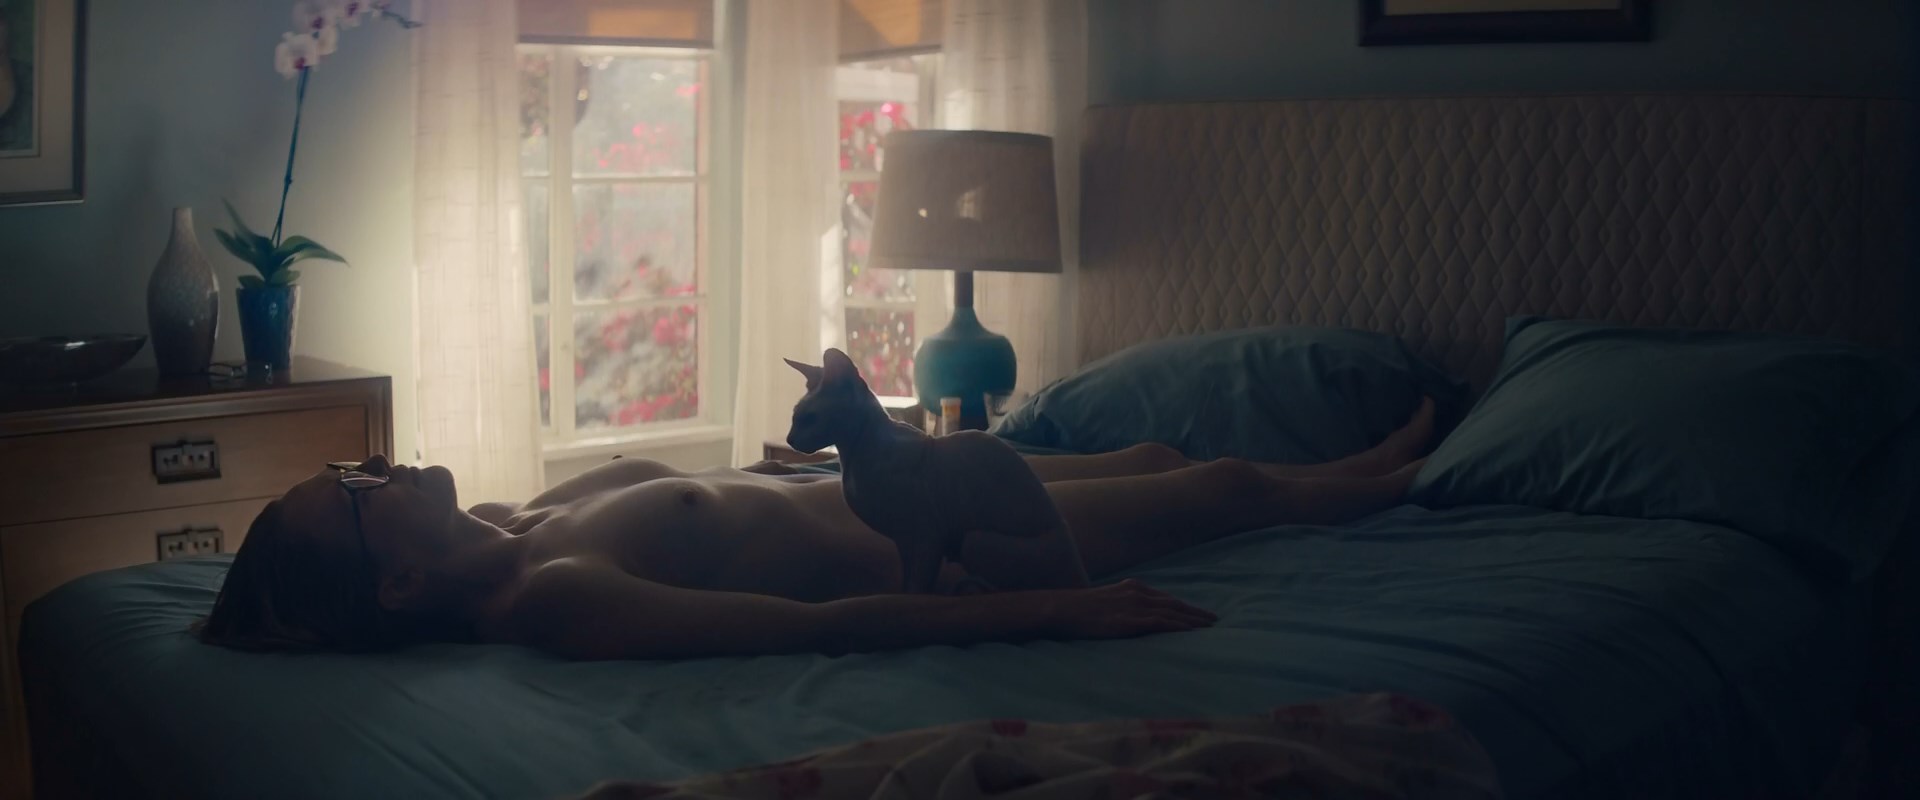 Nude Video Celebs Julianne Moore Nude Gloria Bell 2018